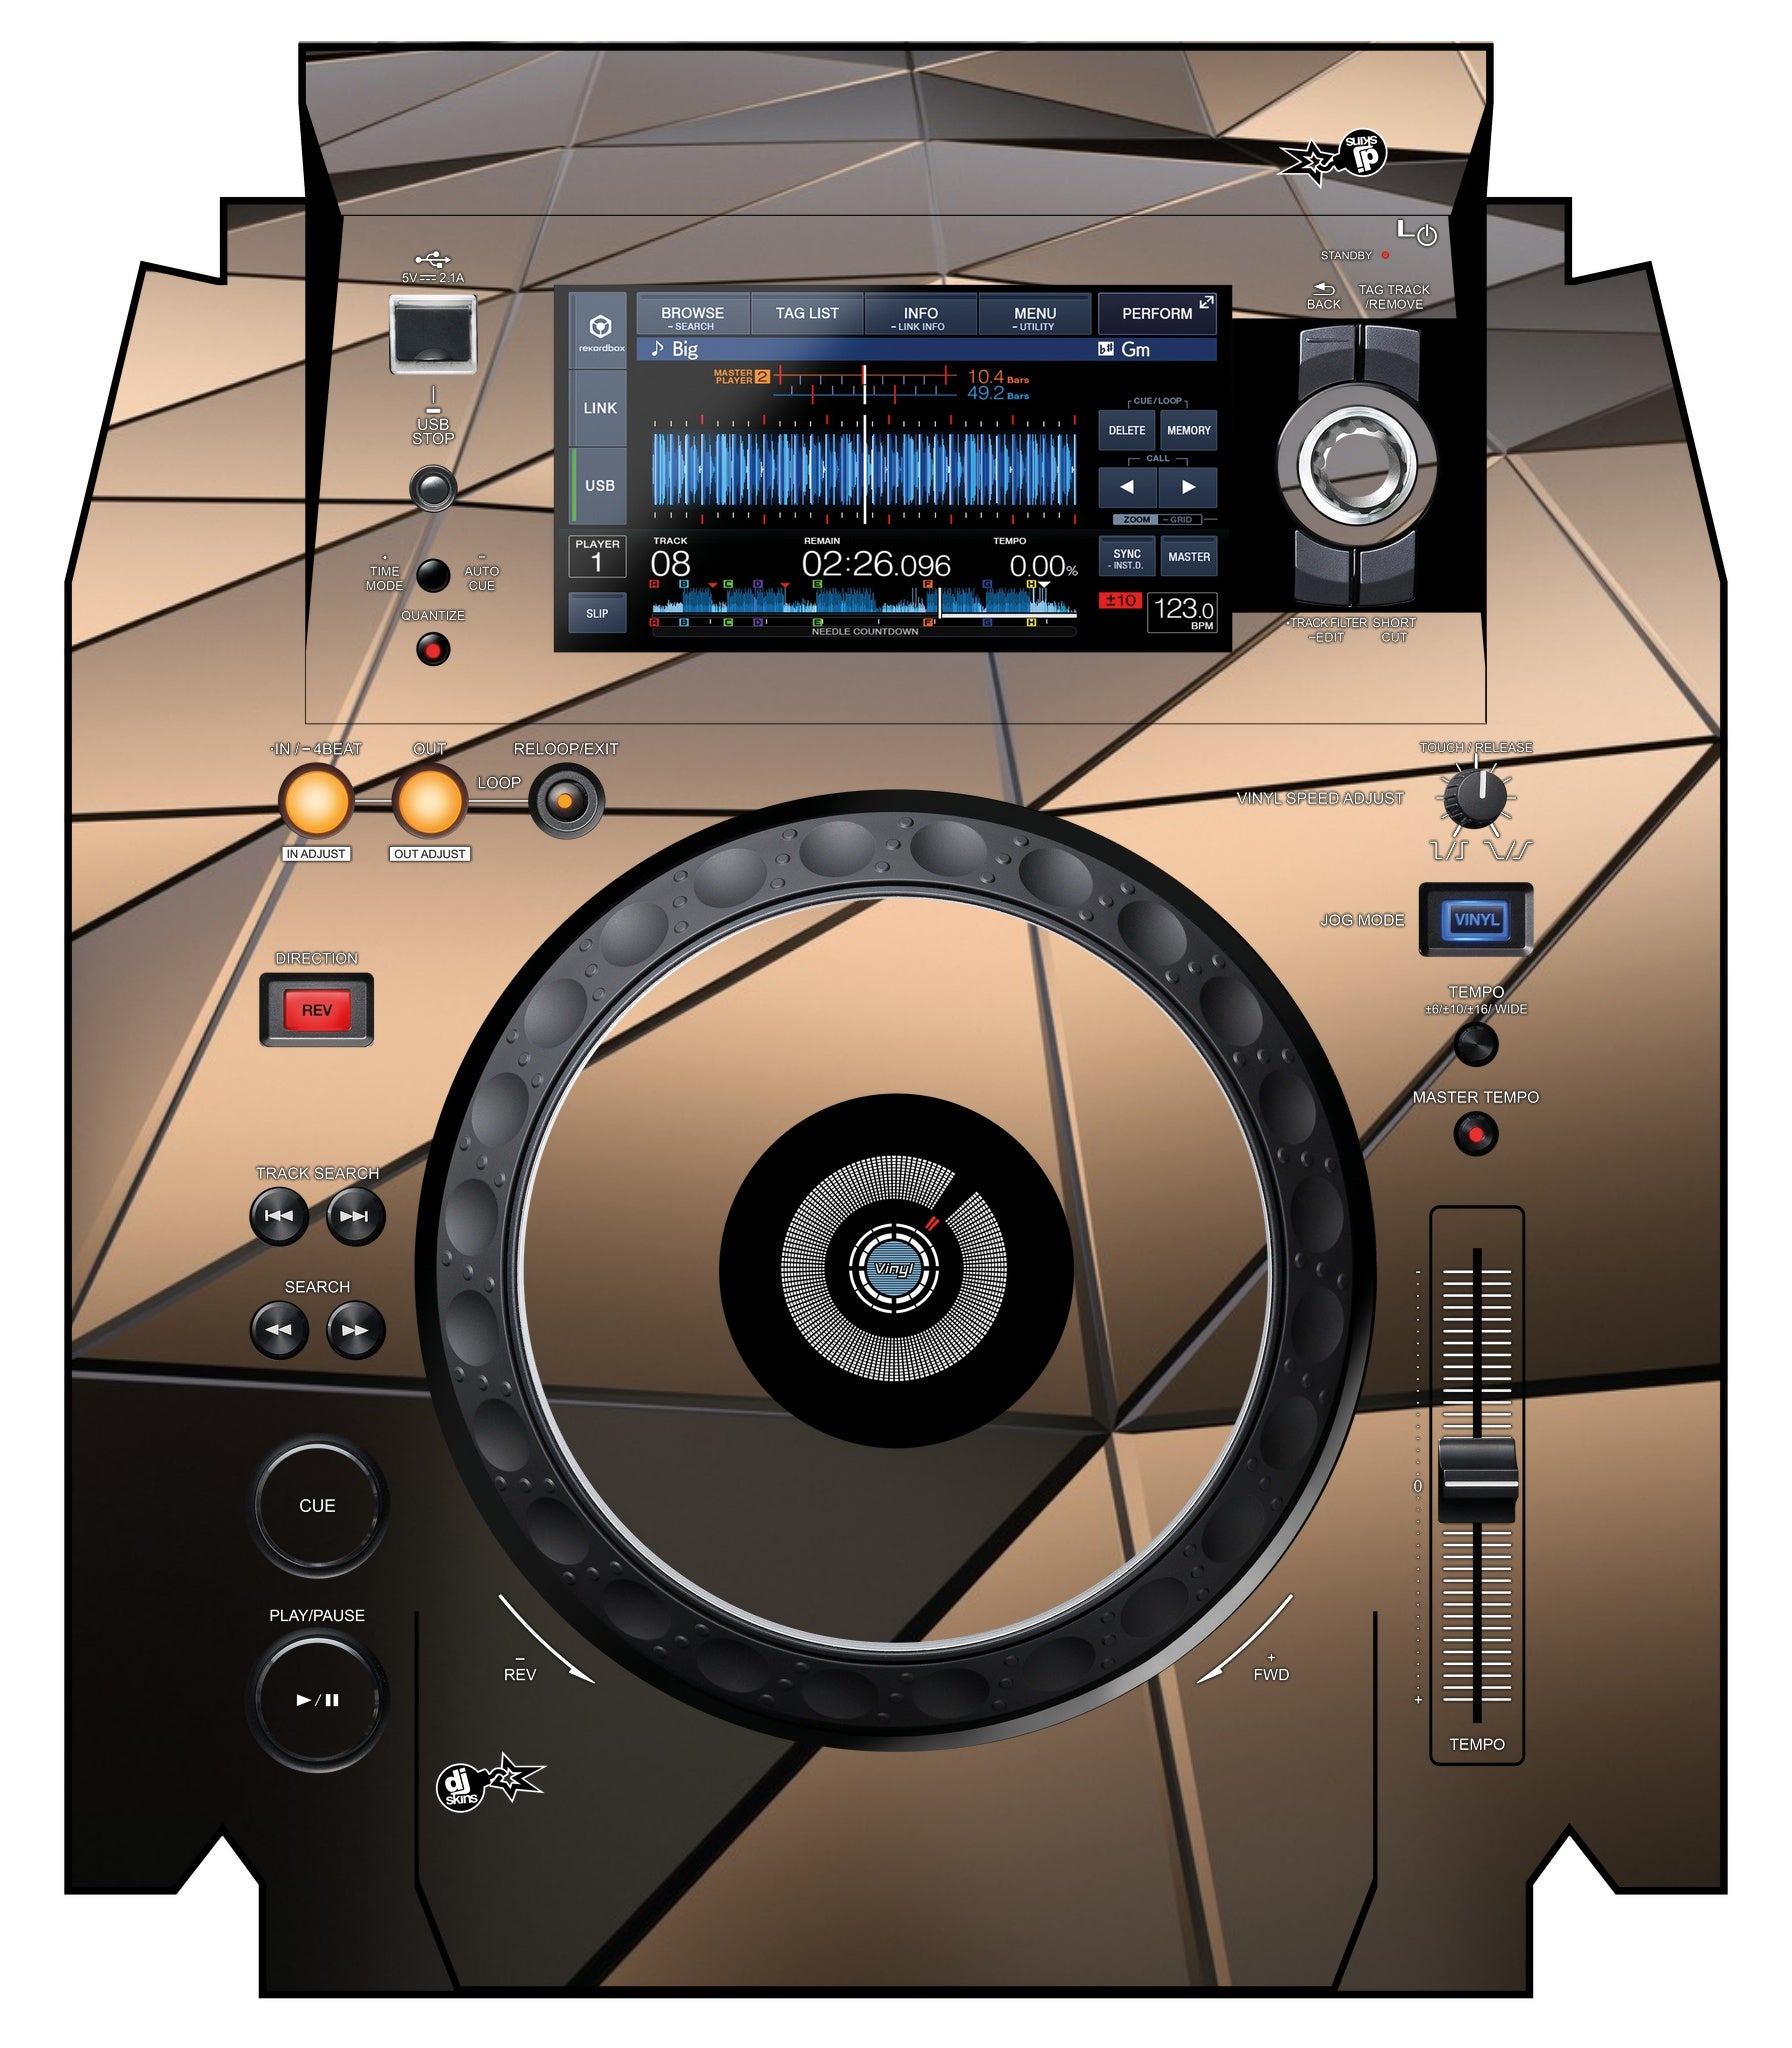 Pioneer DJ XDJ 1000 MK2 Skin Veneno